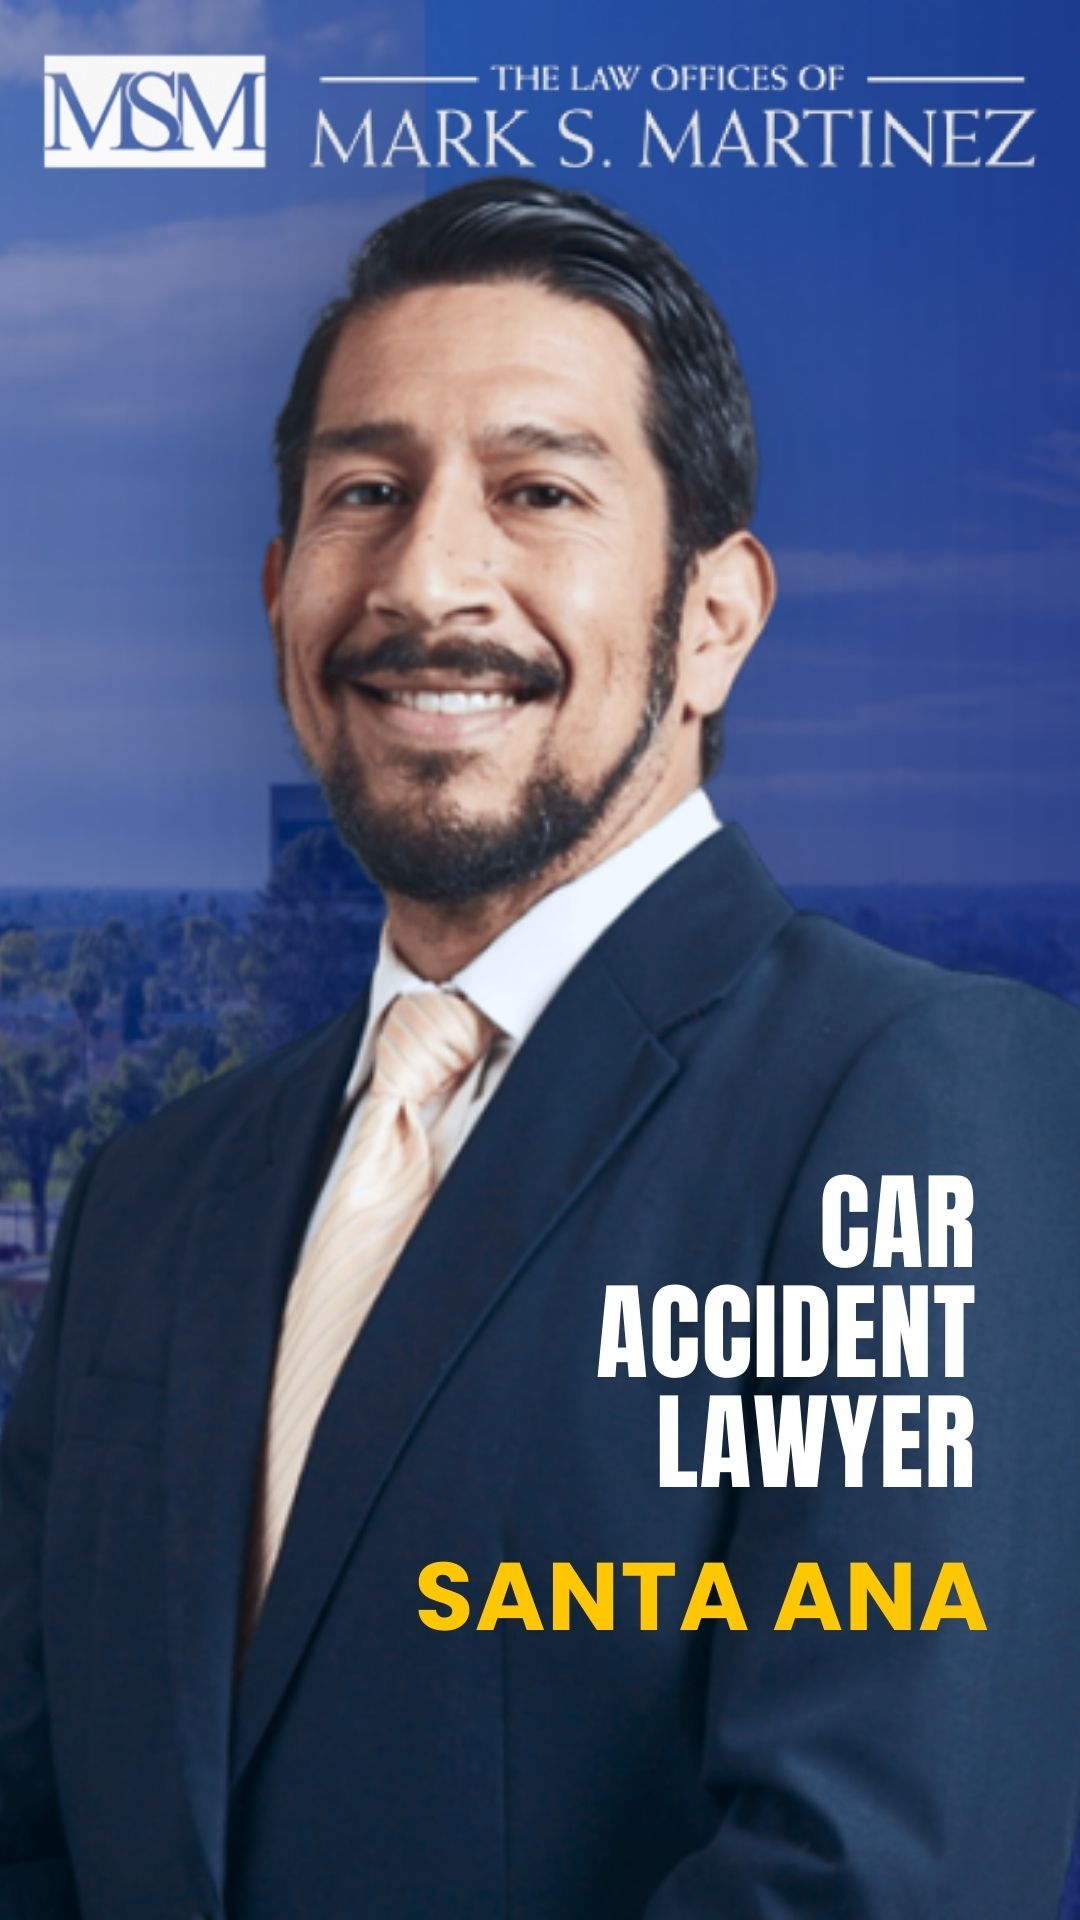 Premises liability attorneys Santa Ana CA